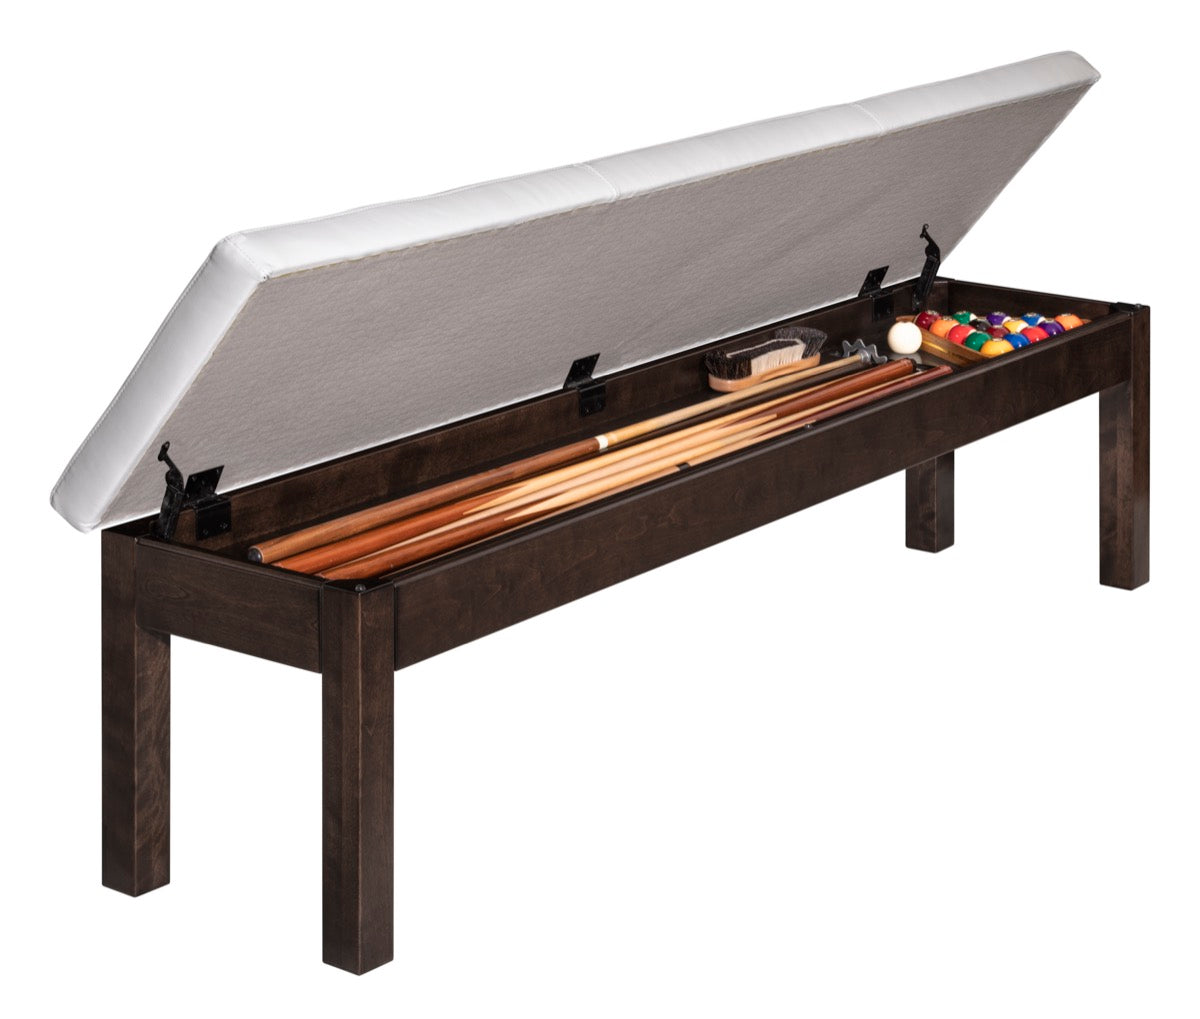 Blatt Storage Bench - Blatt Billiards